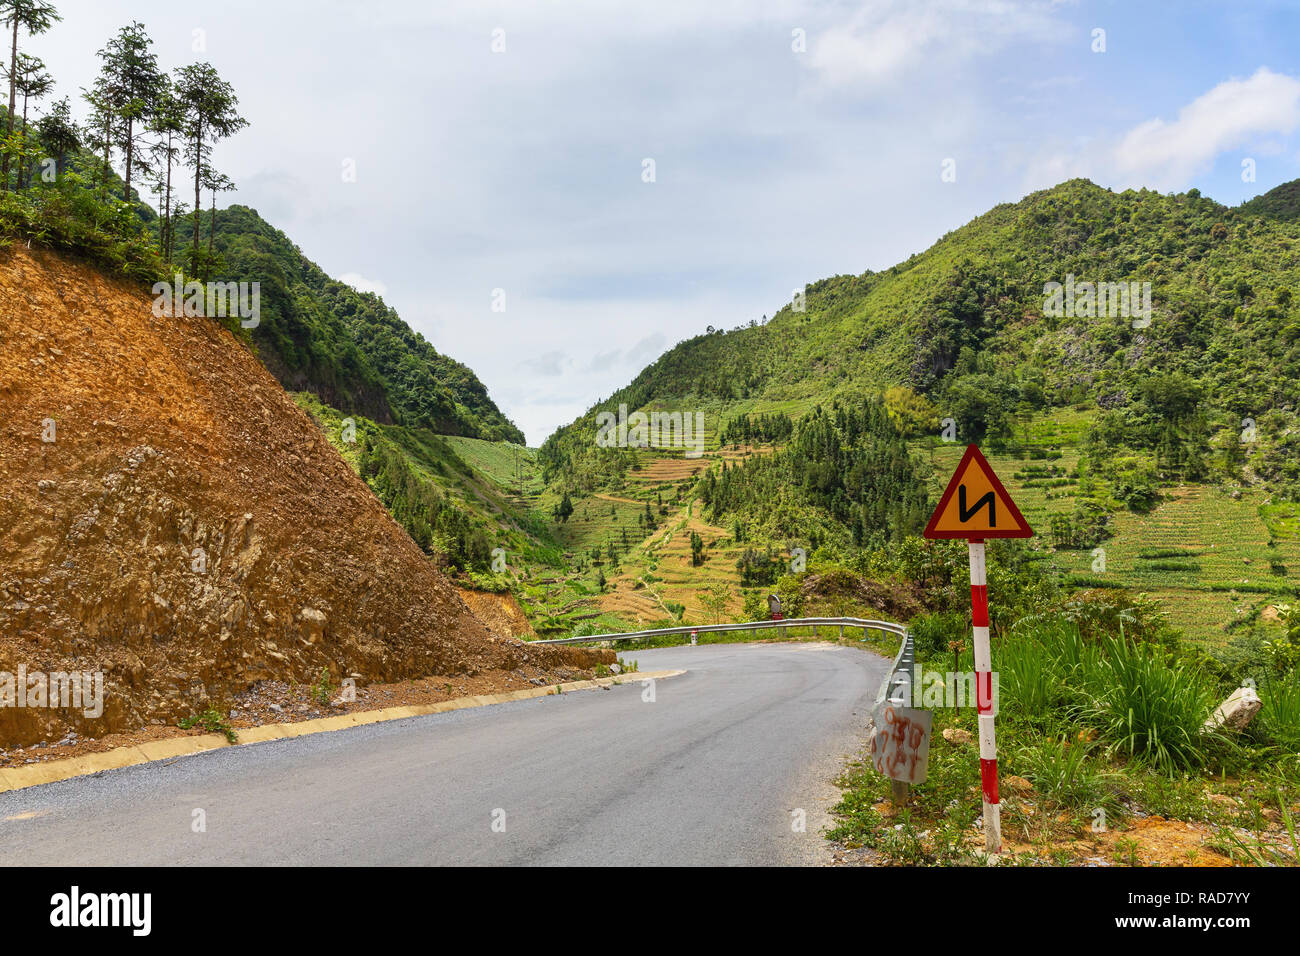 Curves ahead warning sign on winding road, Ha Giang Loop, Ha Giang Province, Vietnam, Asia Stock Photo